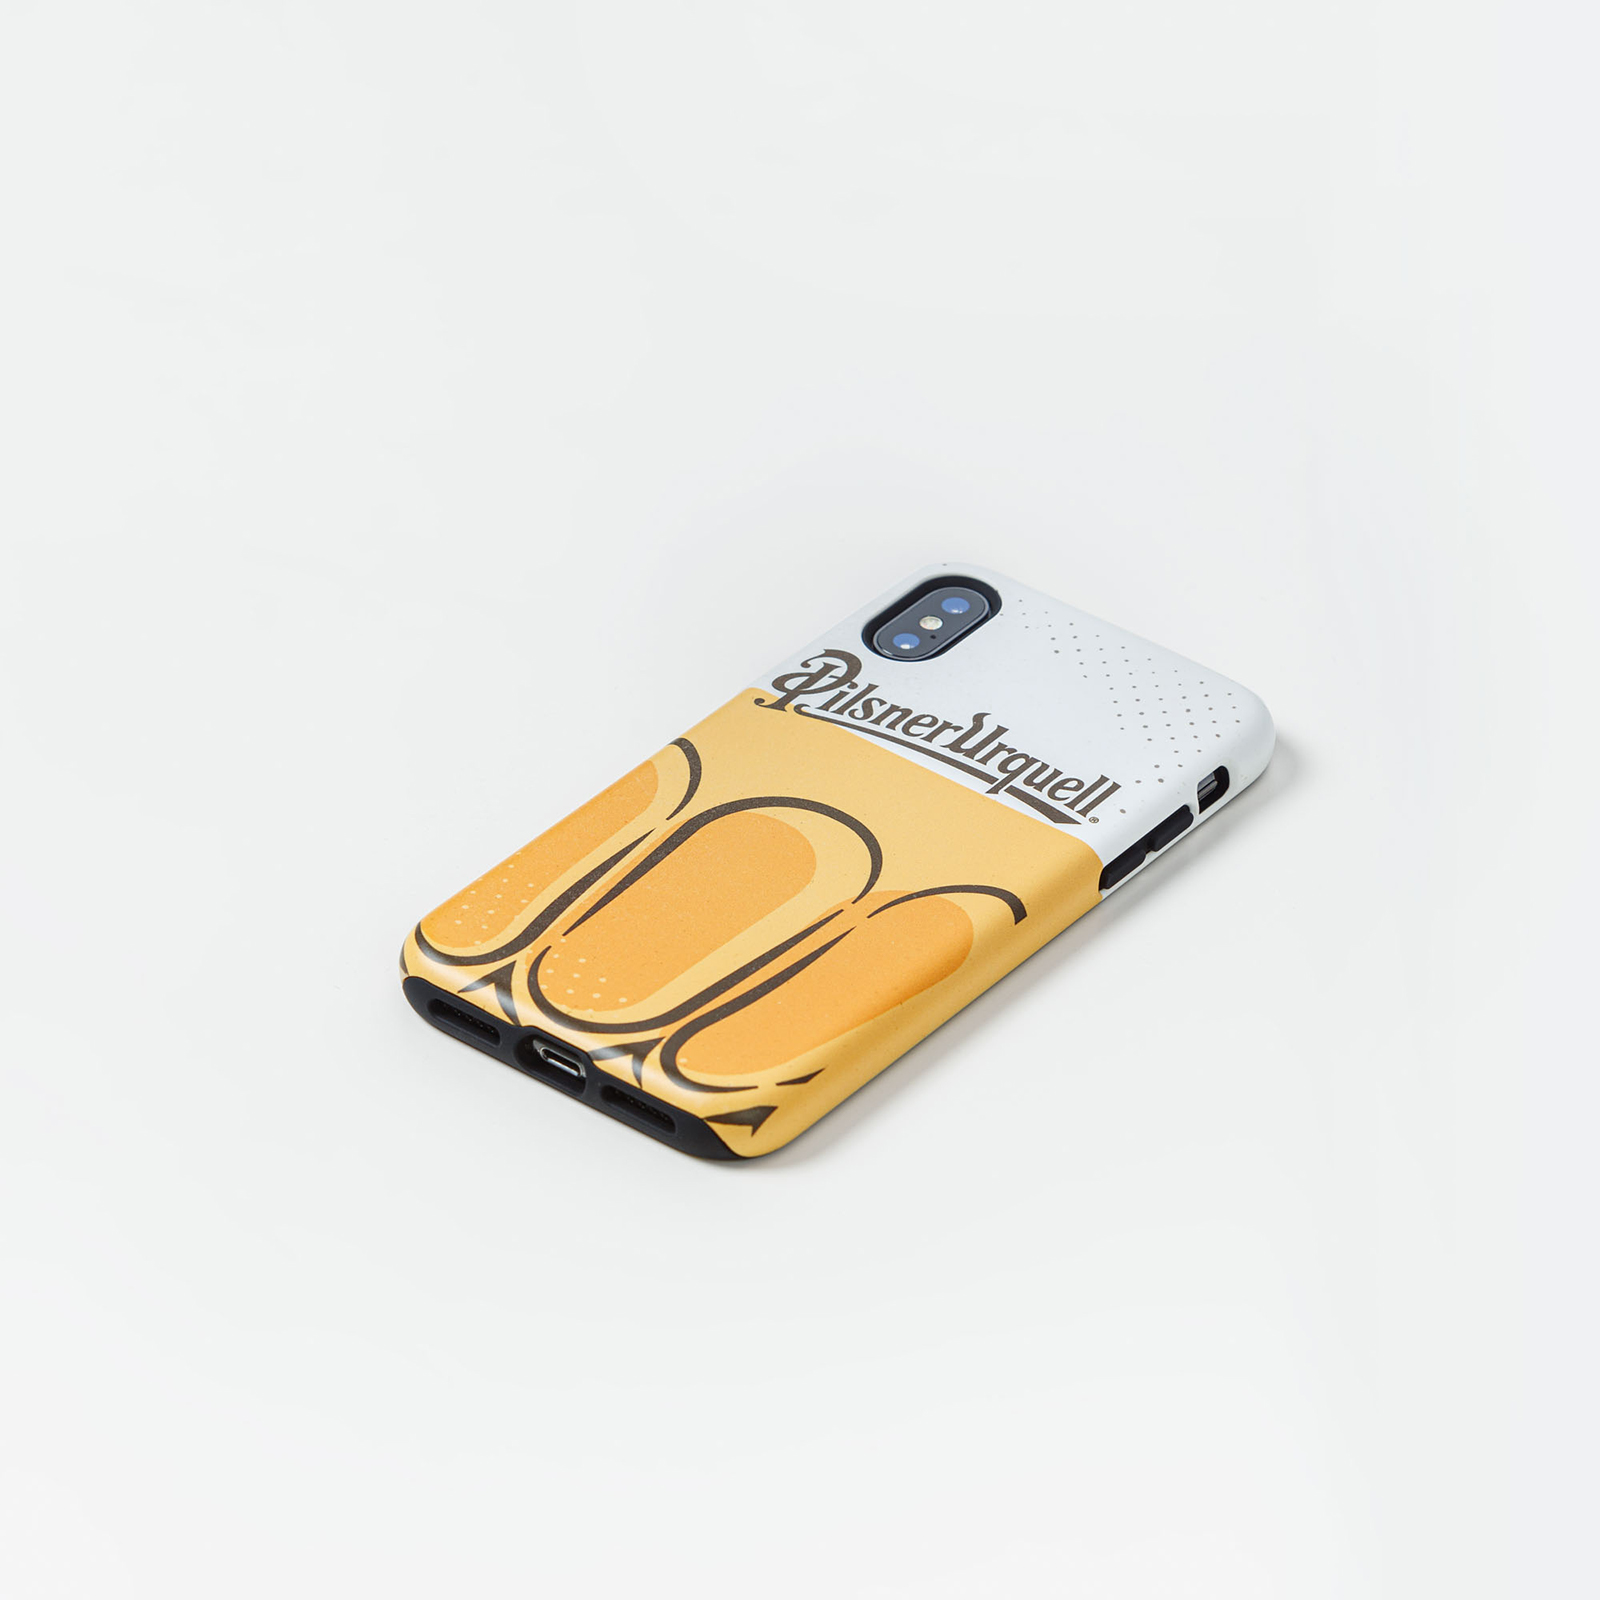 Pilsner Urquell SNAP mobile phone case - glass of beer motif